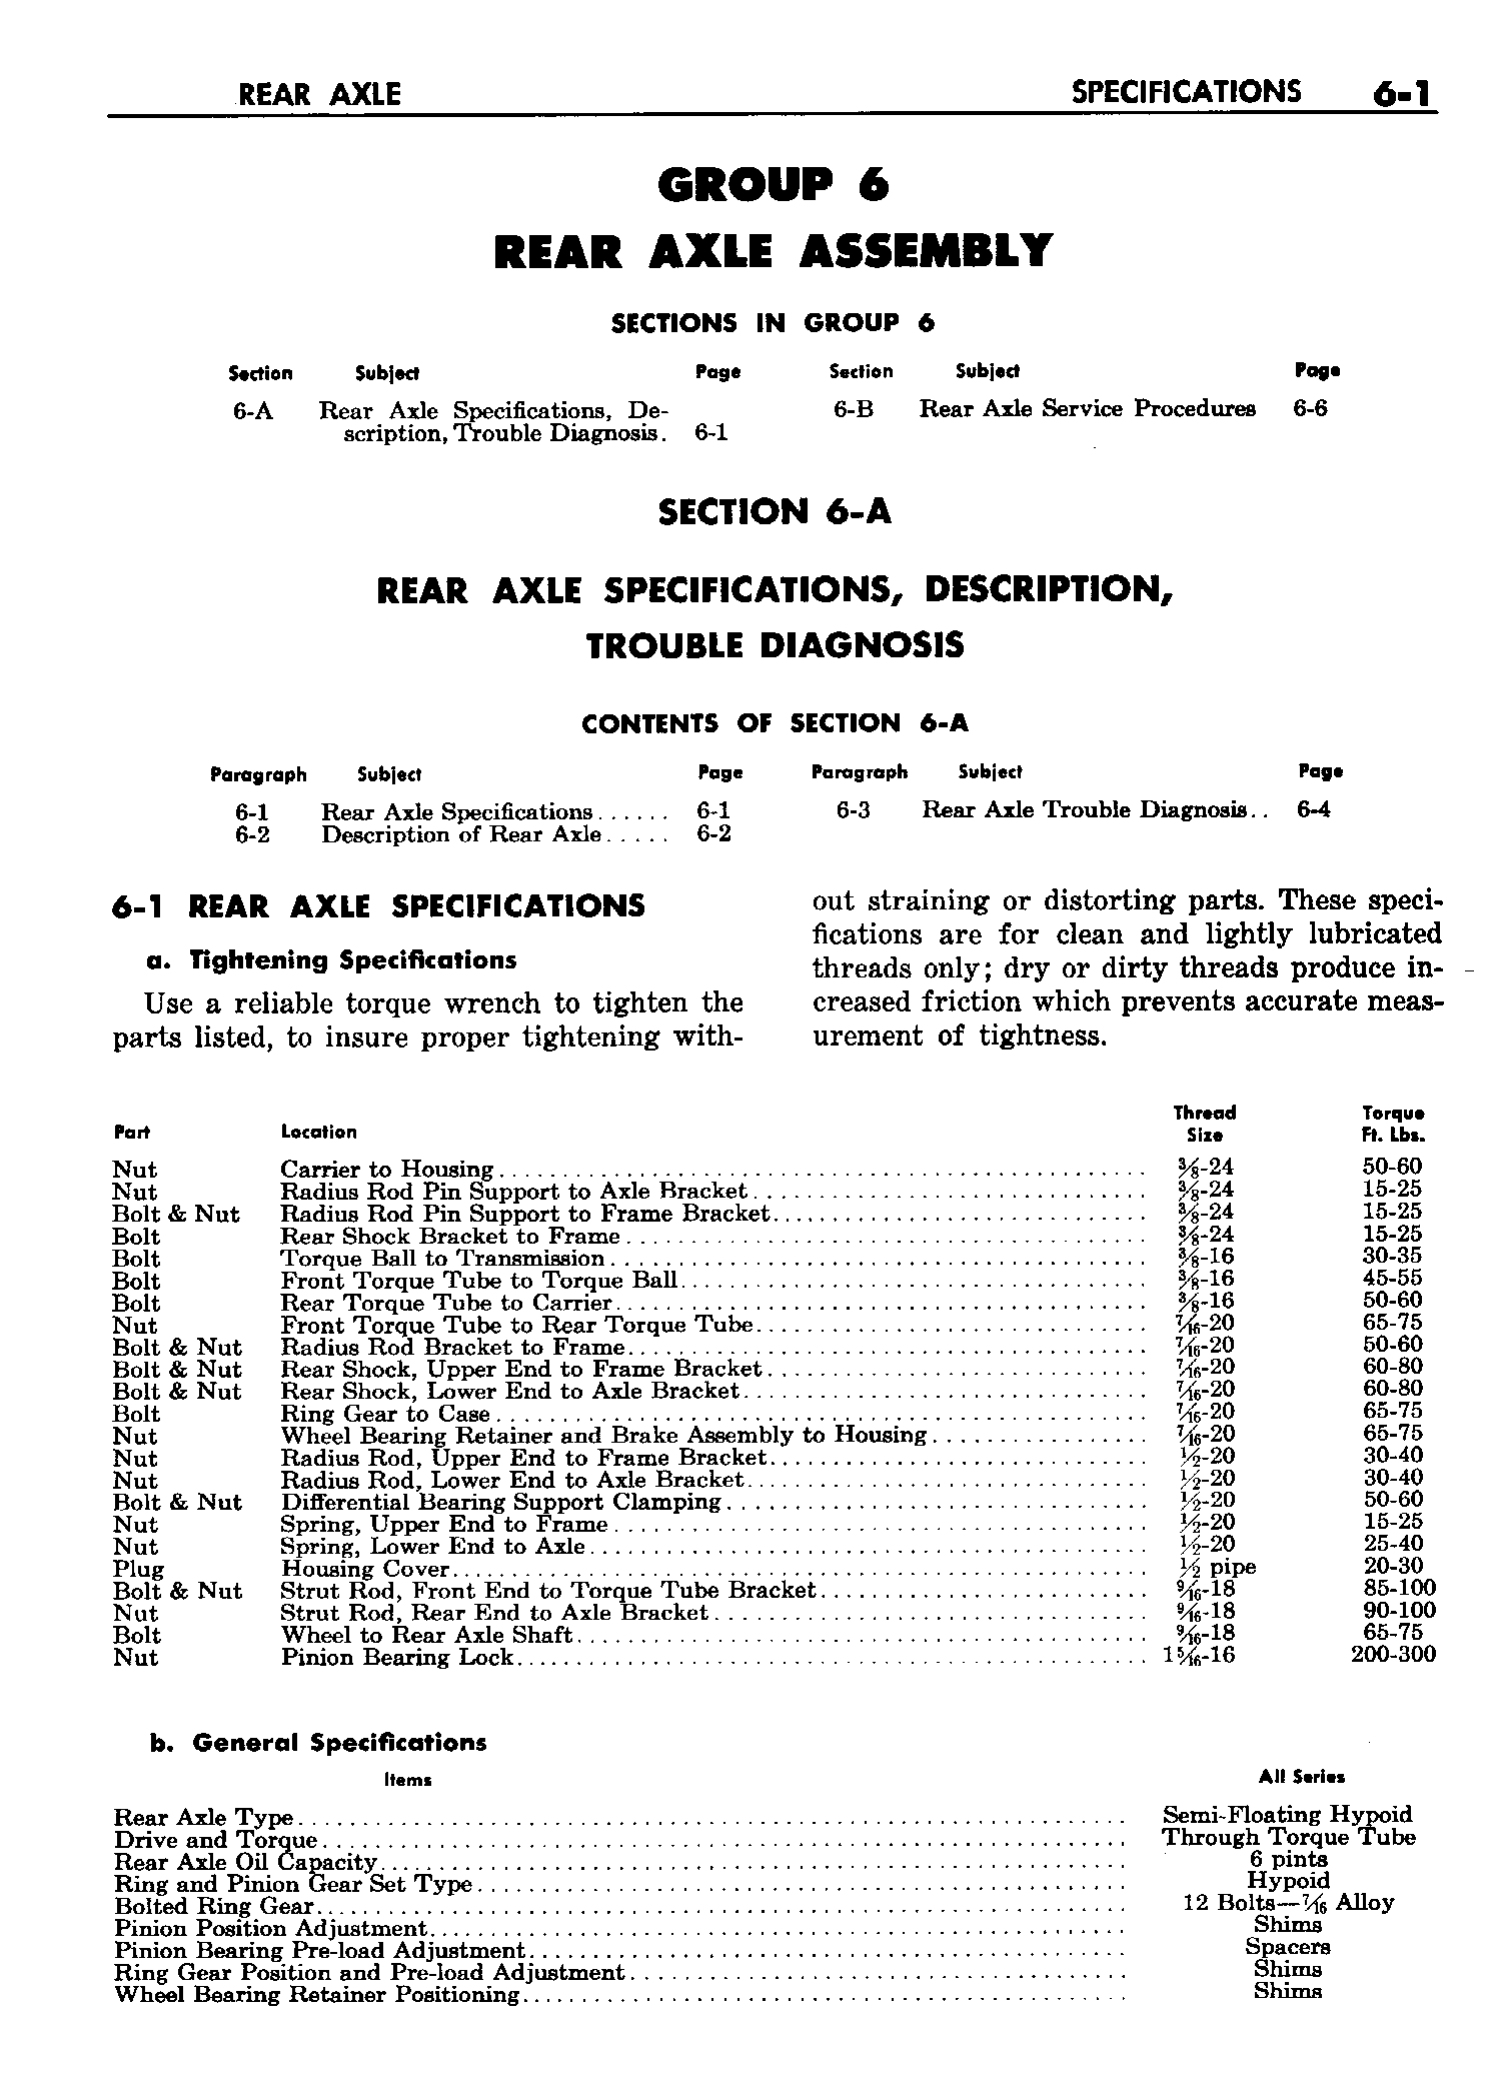 n_07 1958 Buick Shop Manual - Rear Axle_1.jpg